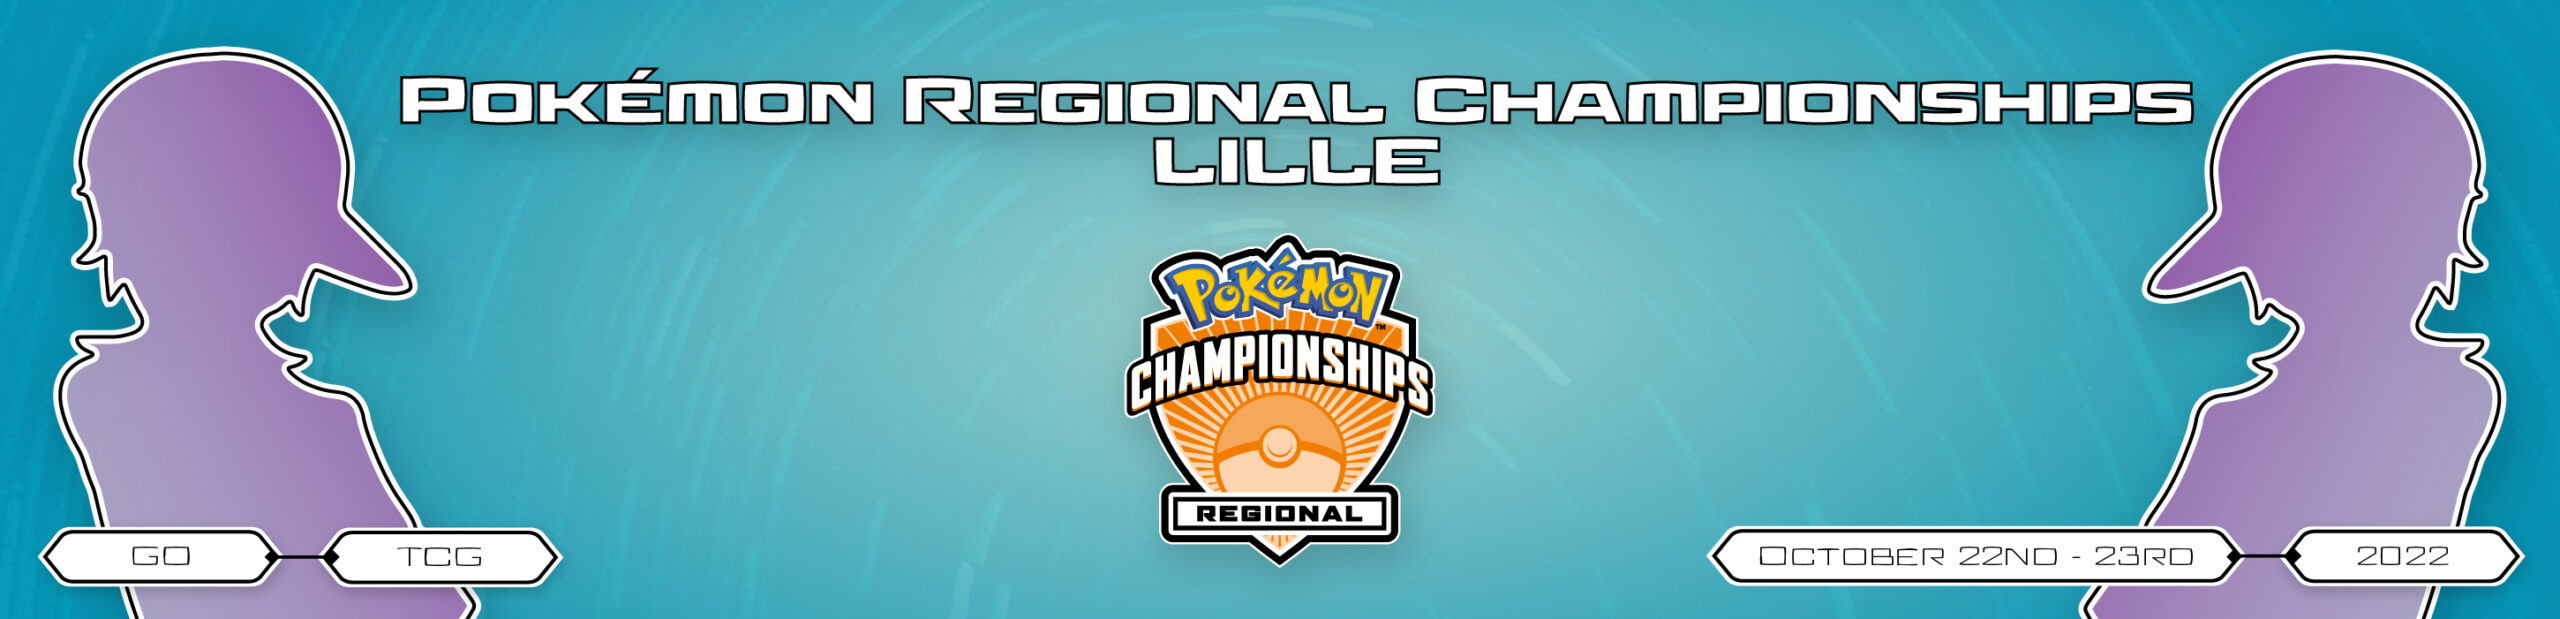 Pokémon regional Championships Lille